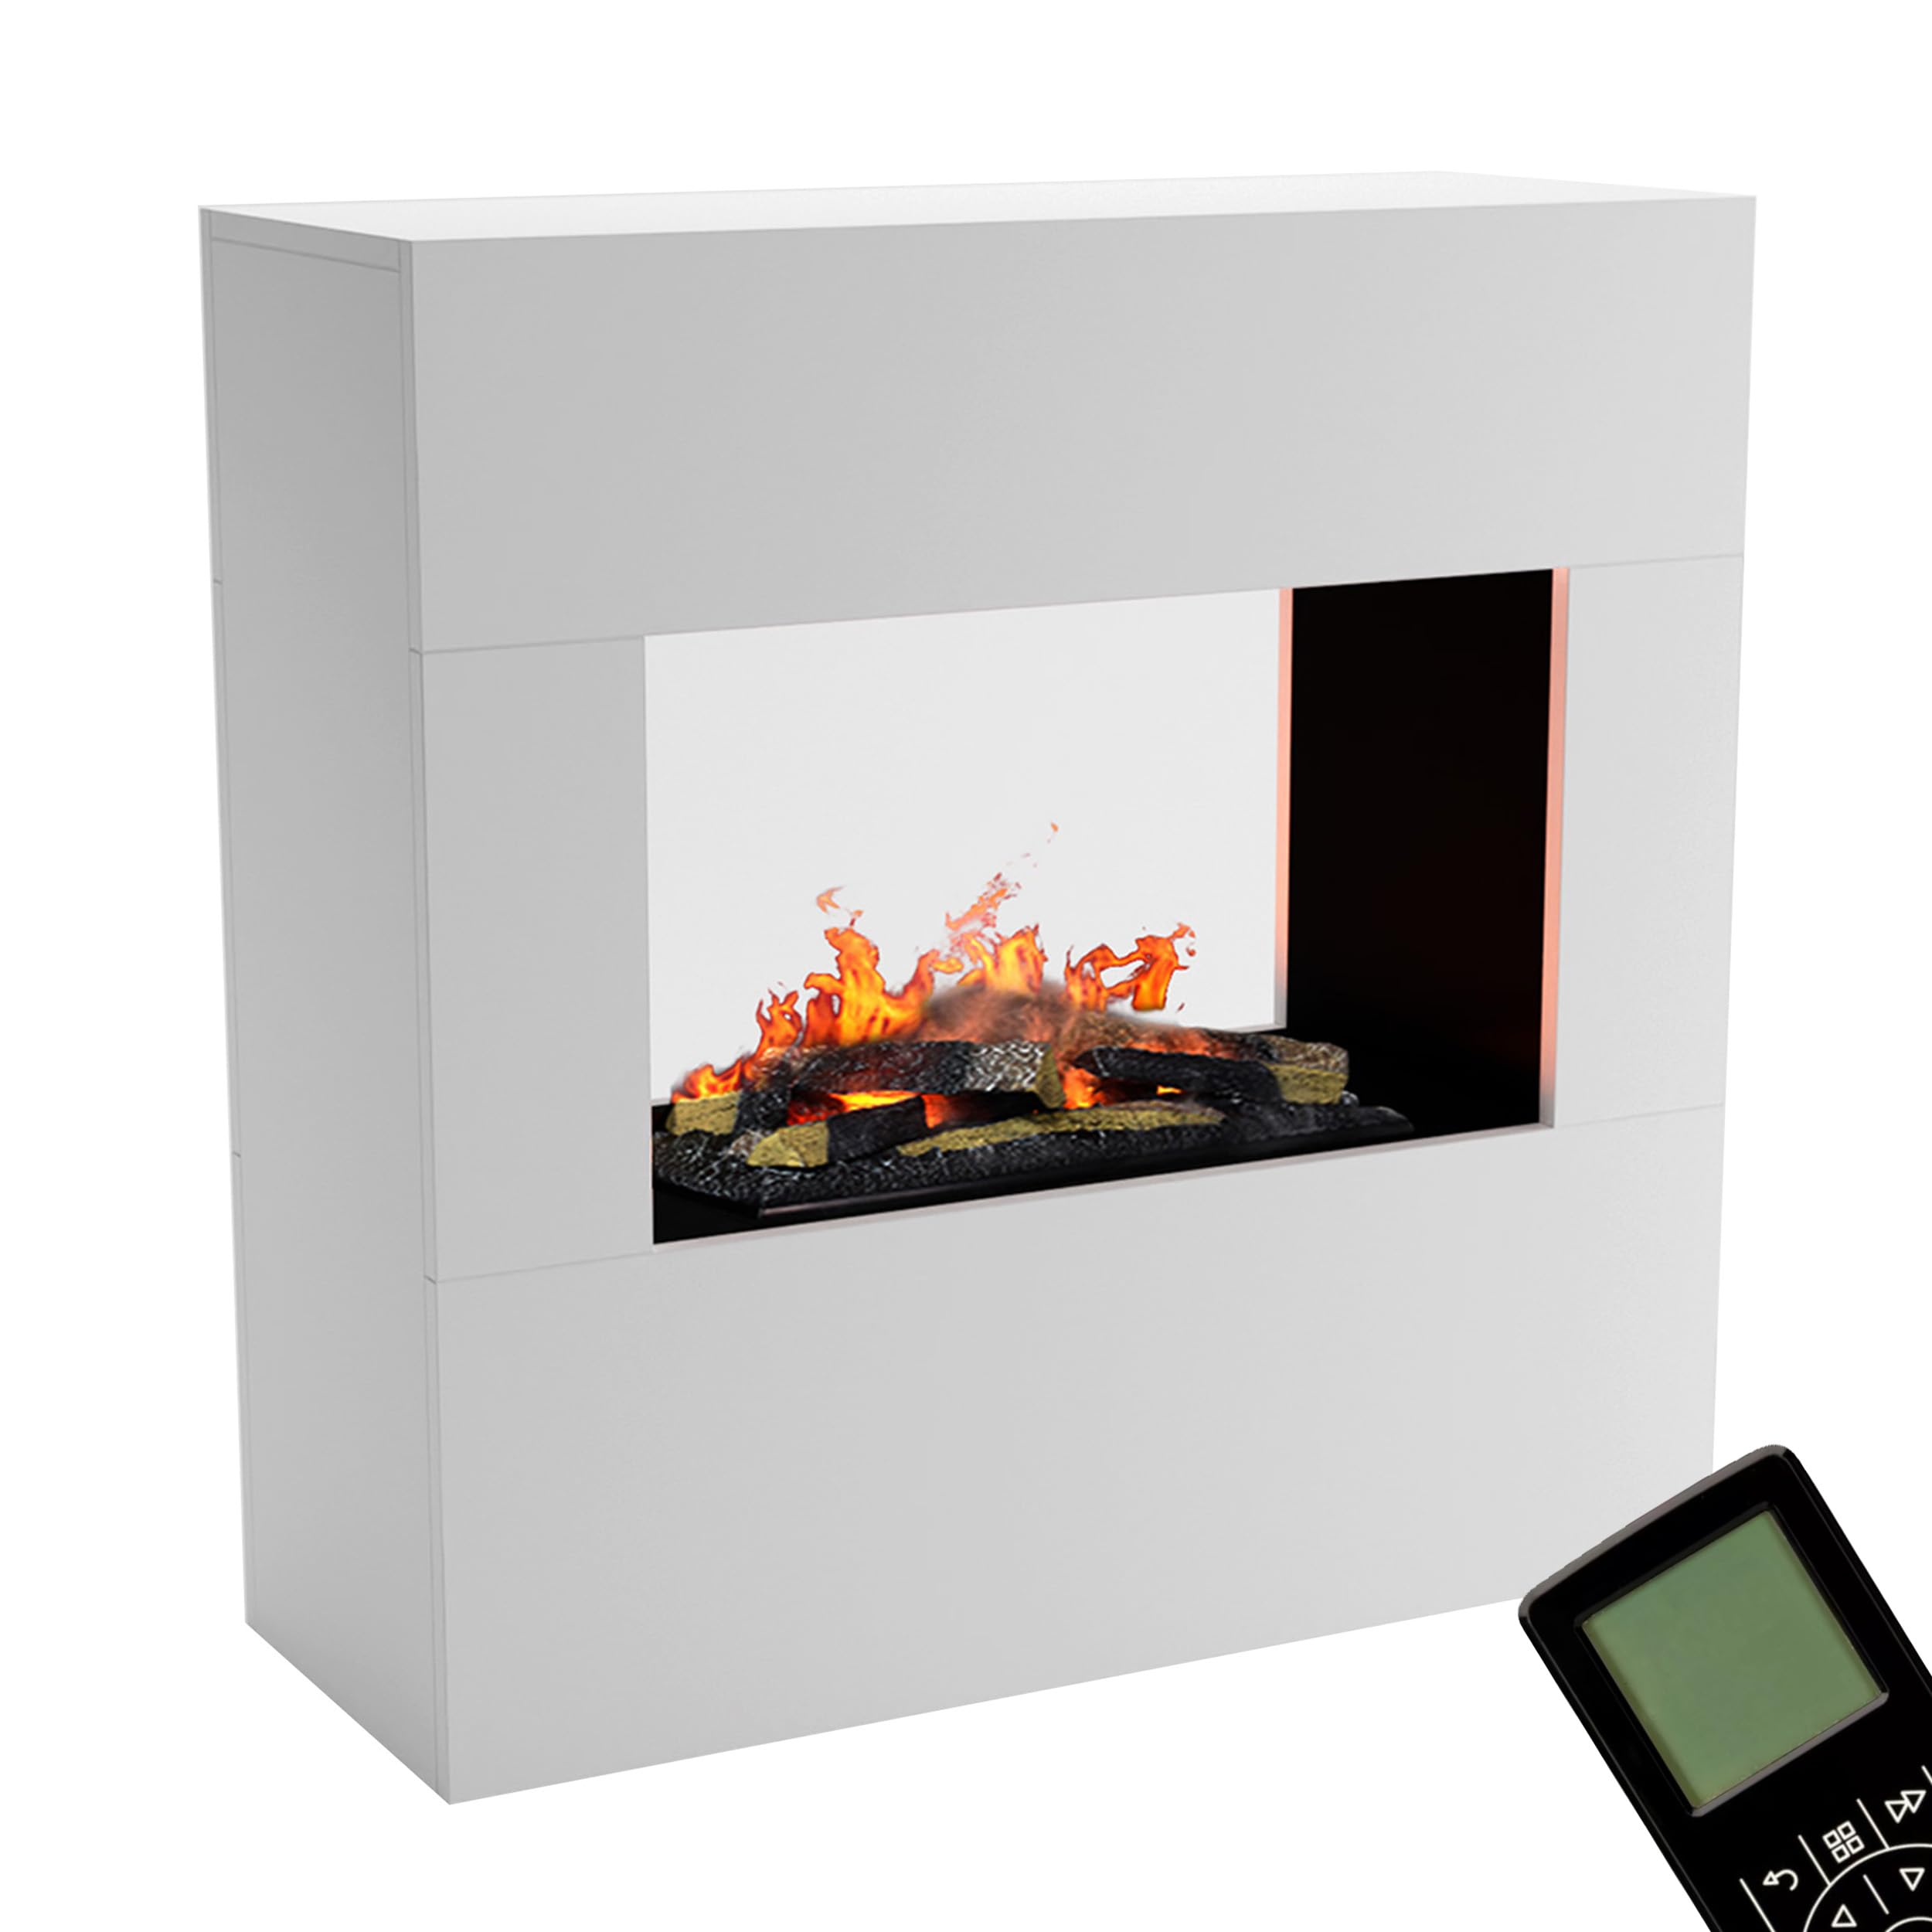 GLOW FIRE Wasserdampf Kamin Goethe (Standkamin) - Elektrokamin mit realistischen LED 3D-Flammen, Knistereffekt & Fernbedienung, 100x100x38 cm - Opti-Myst 600 Elektro Kamin mit Holz-Deko, Weiß